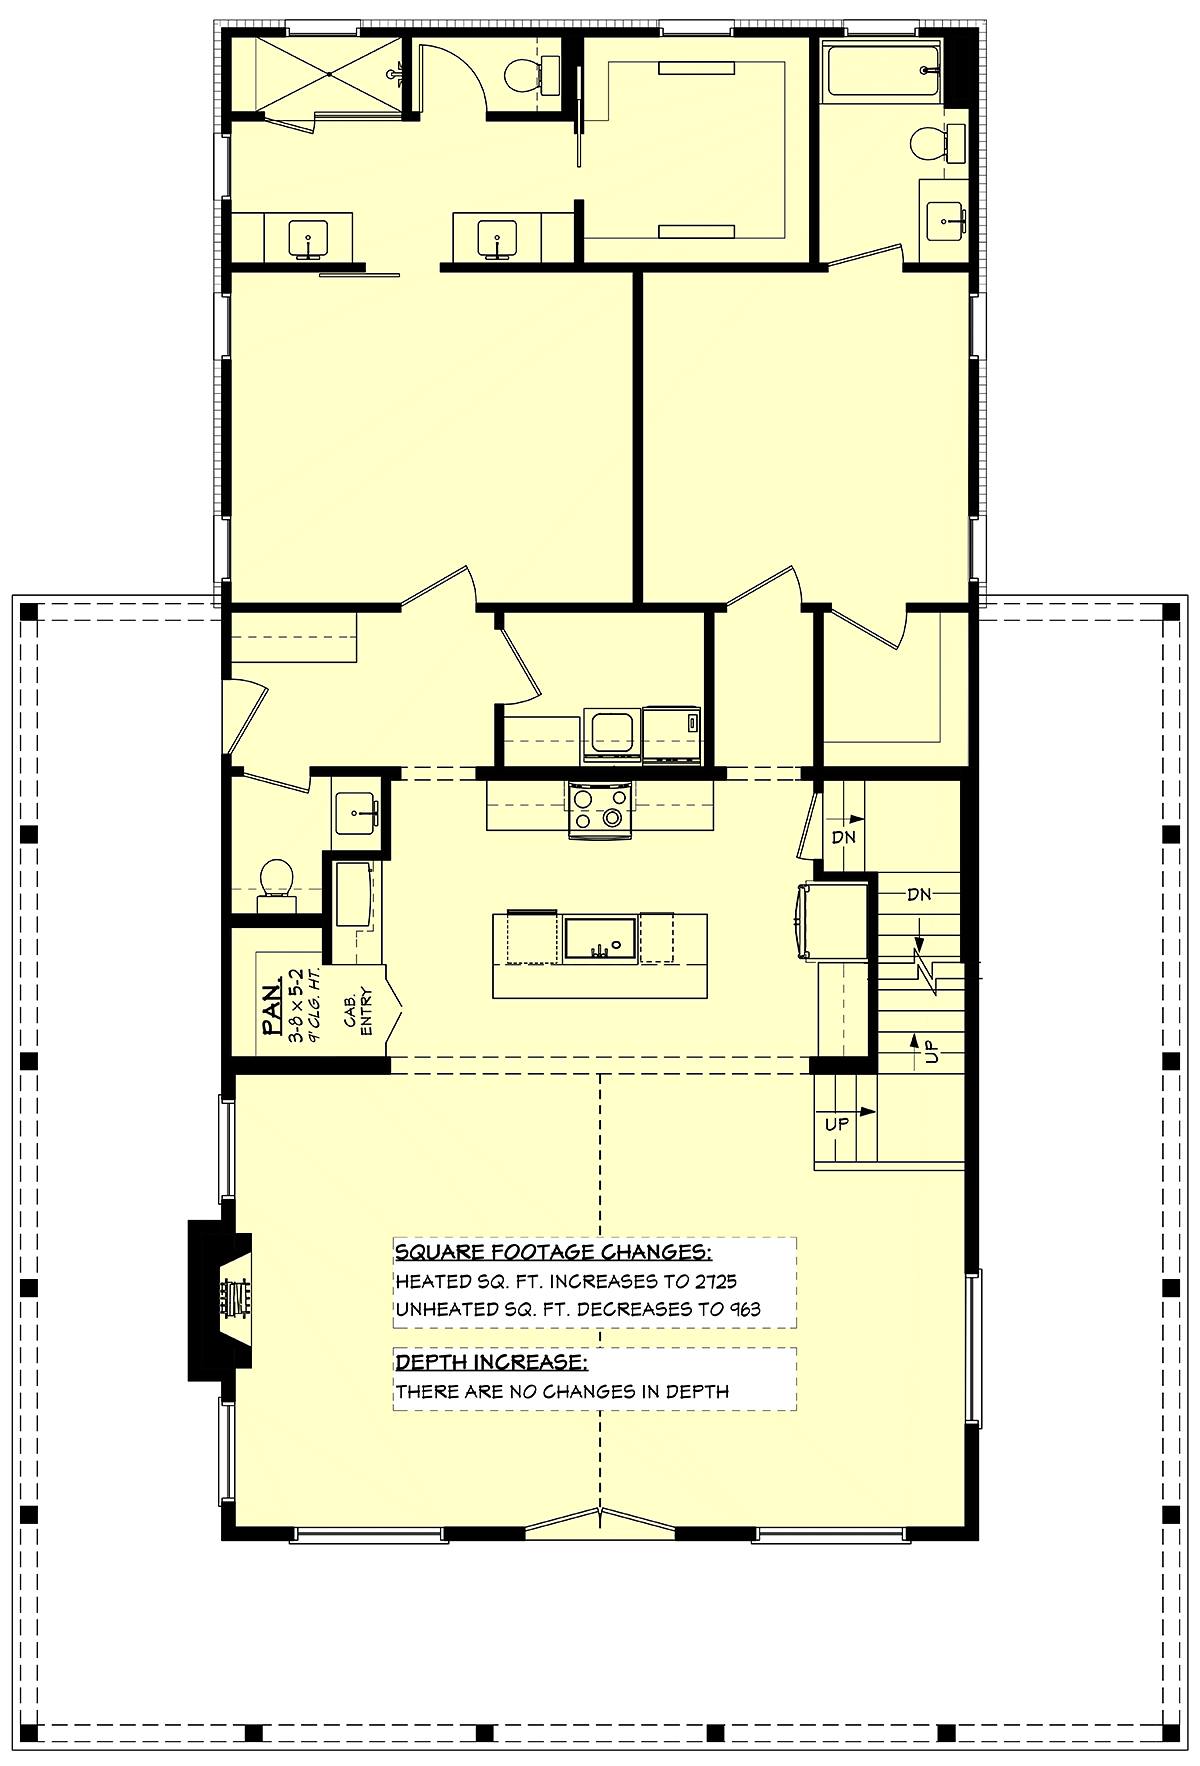 House Plan 80860 Alternate Level One